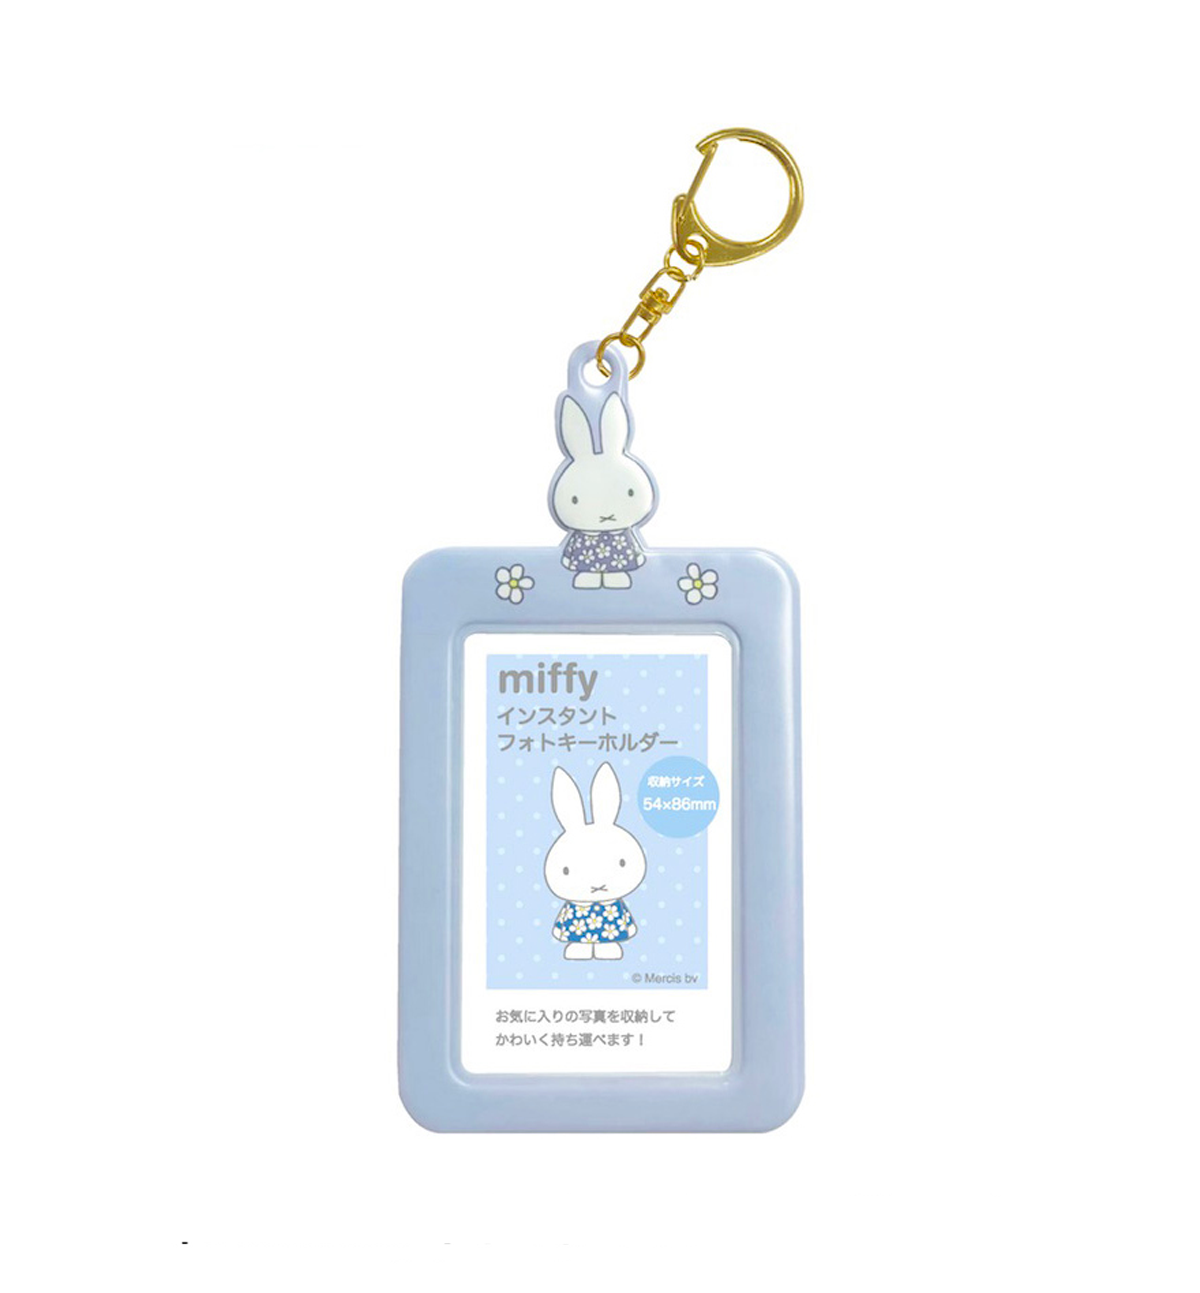 Miffy & Friends Photocard Holder [Blue]